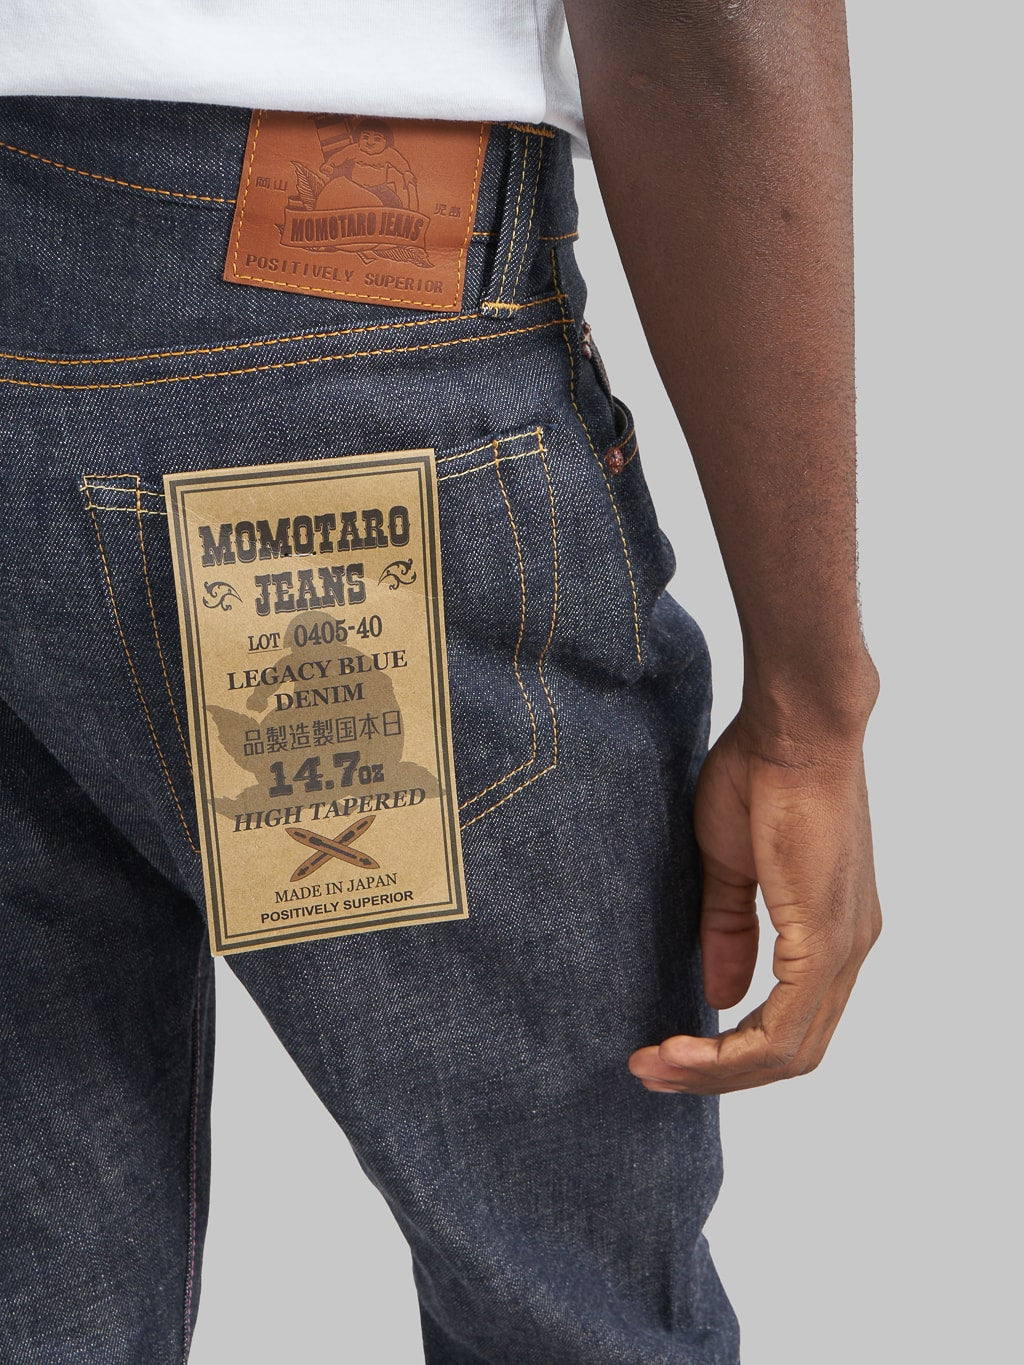 Momotaro legacy blue high tapered jeans slubby texture